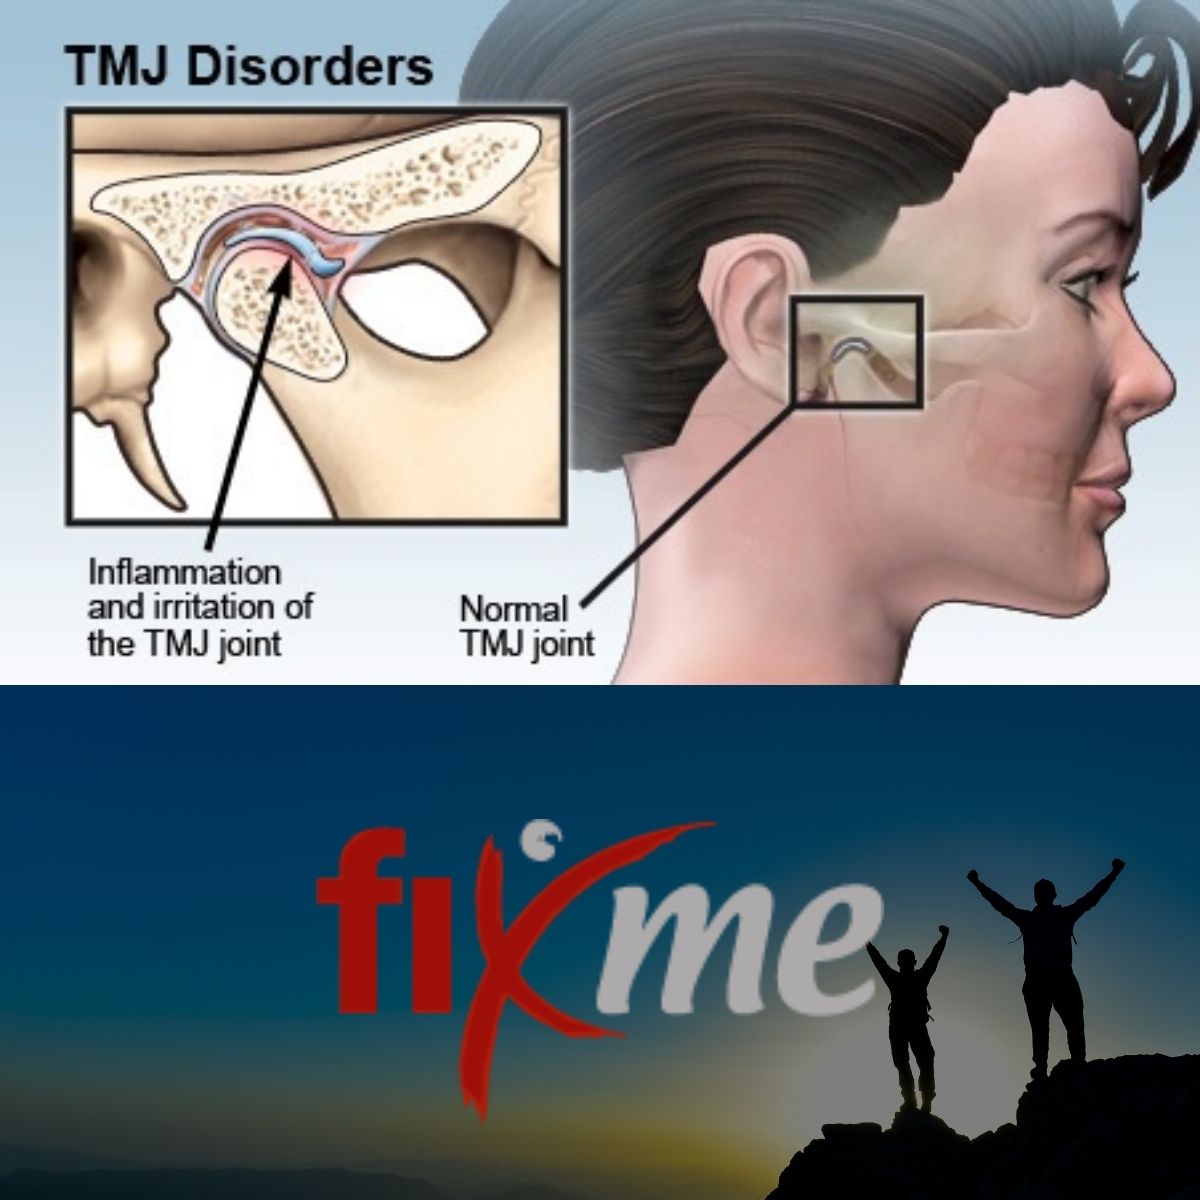 What are TMJ (temporomandibular joint) issues?